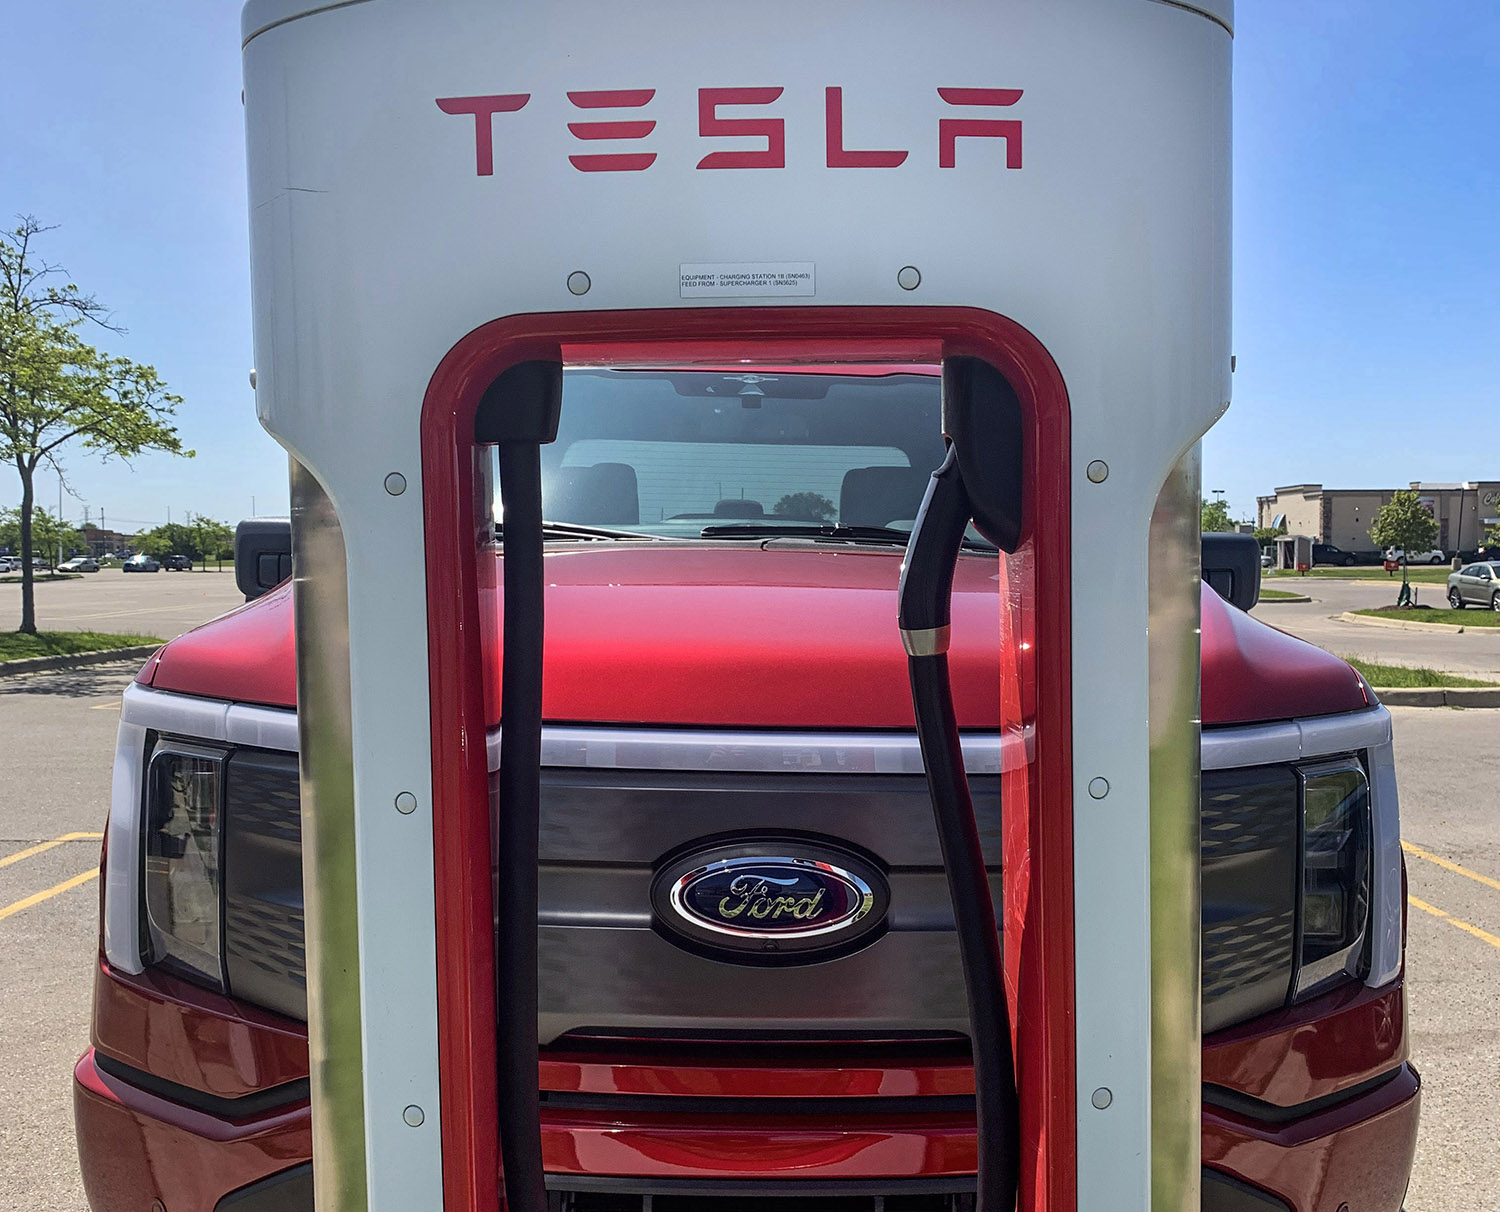 A Ford F-150 Lightning at a Tesla Supercharger station